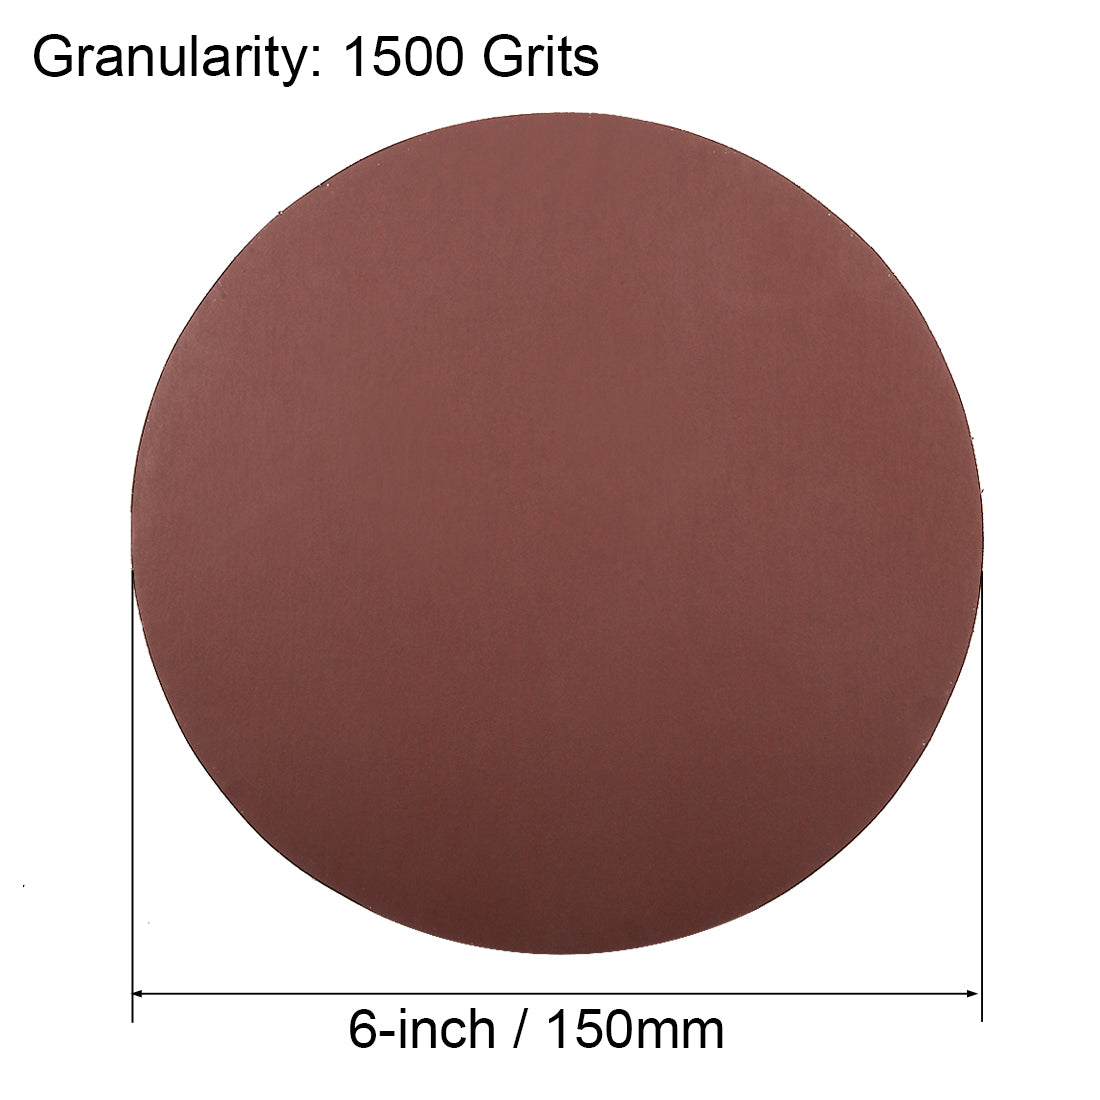 uxcell Uxcell 6-inch 1500-Grits PSA Sanding Disc, Adhesive-Backed Sanding Sheets Aluminum Oxide Sandpaper for Random Orbital Sander 20pcs